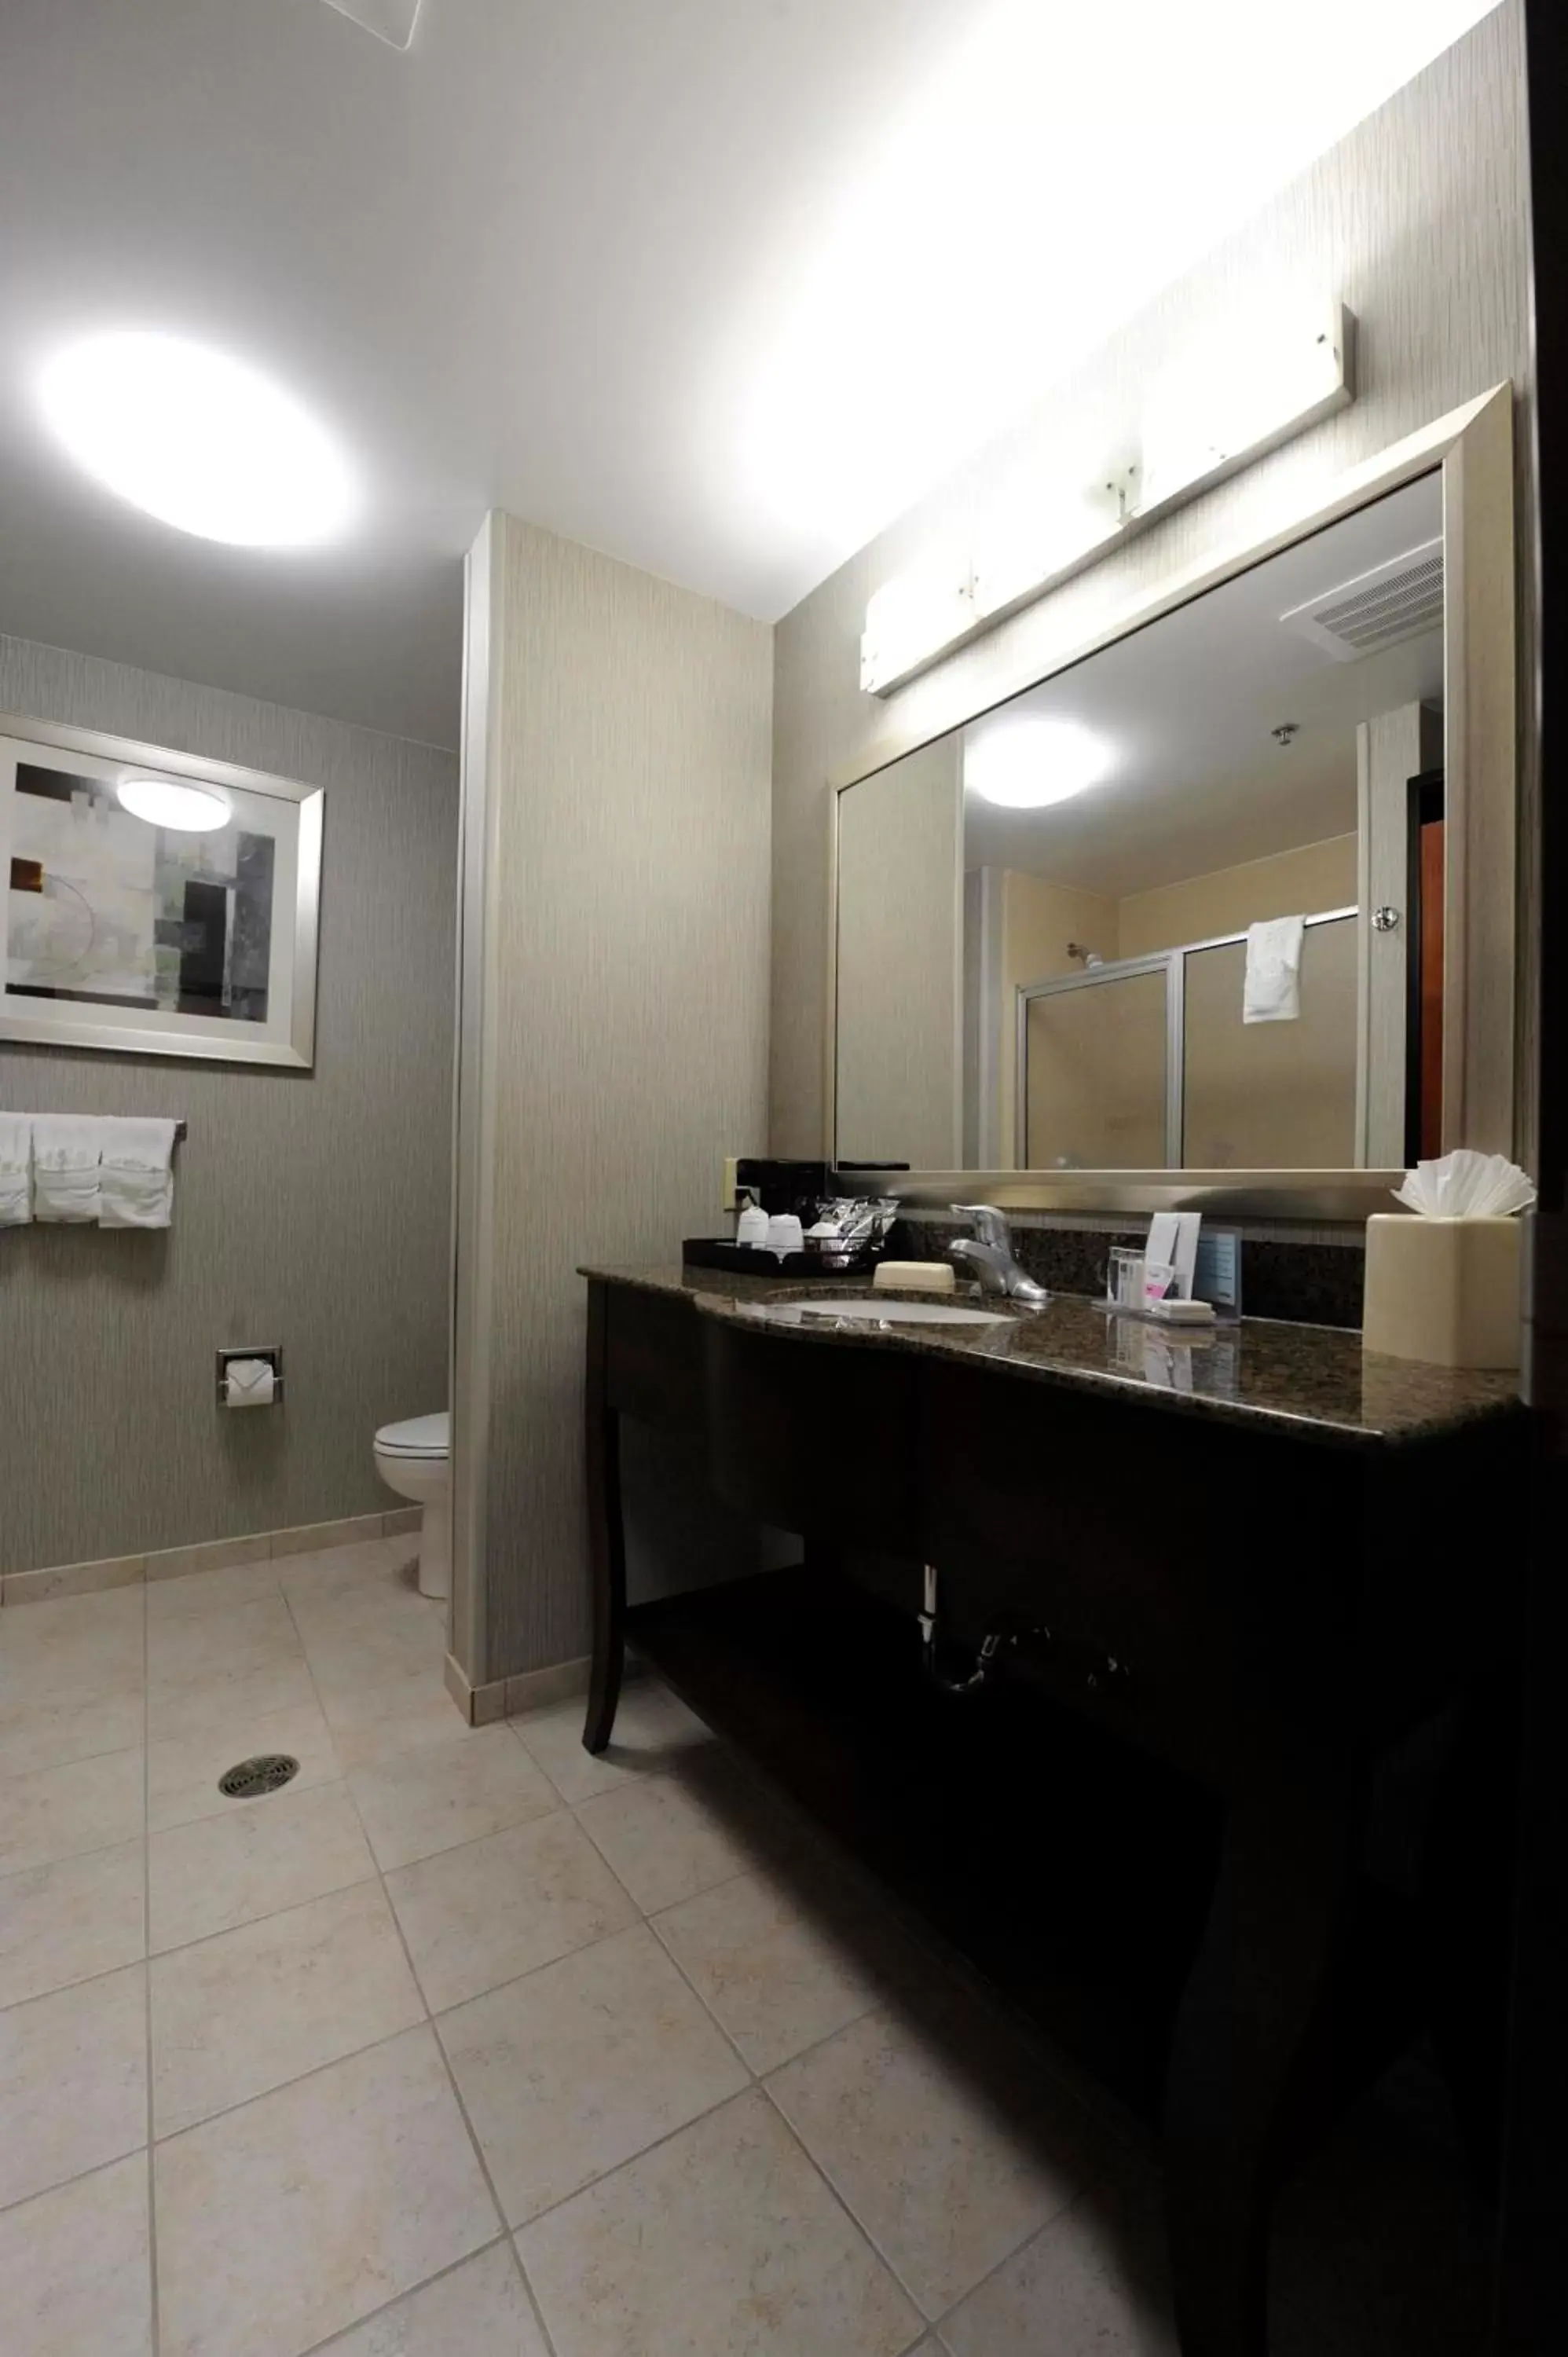 Bathroom in Hampton Inn & Suites Craig, CO